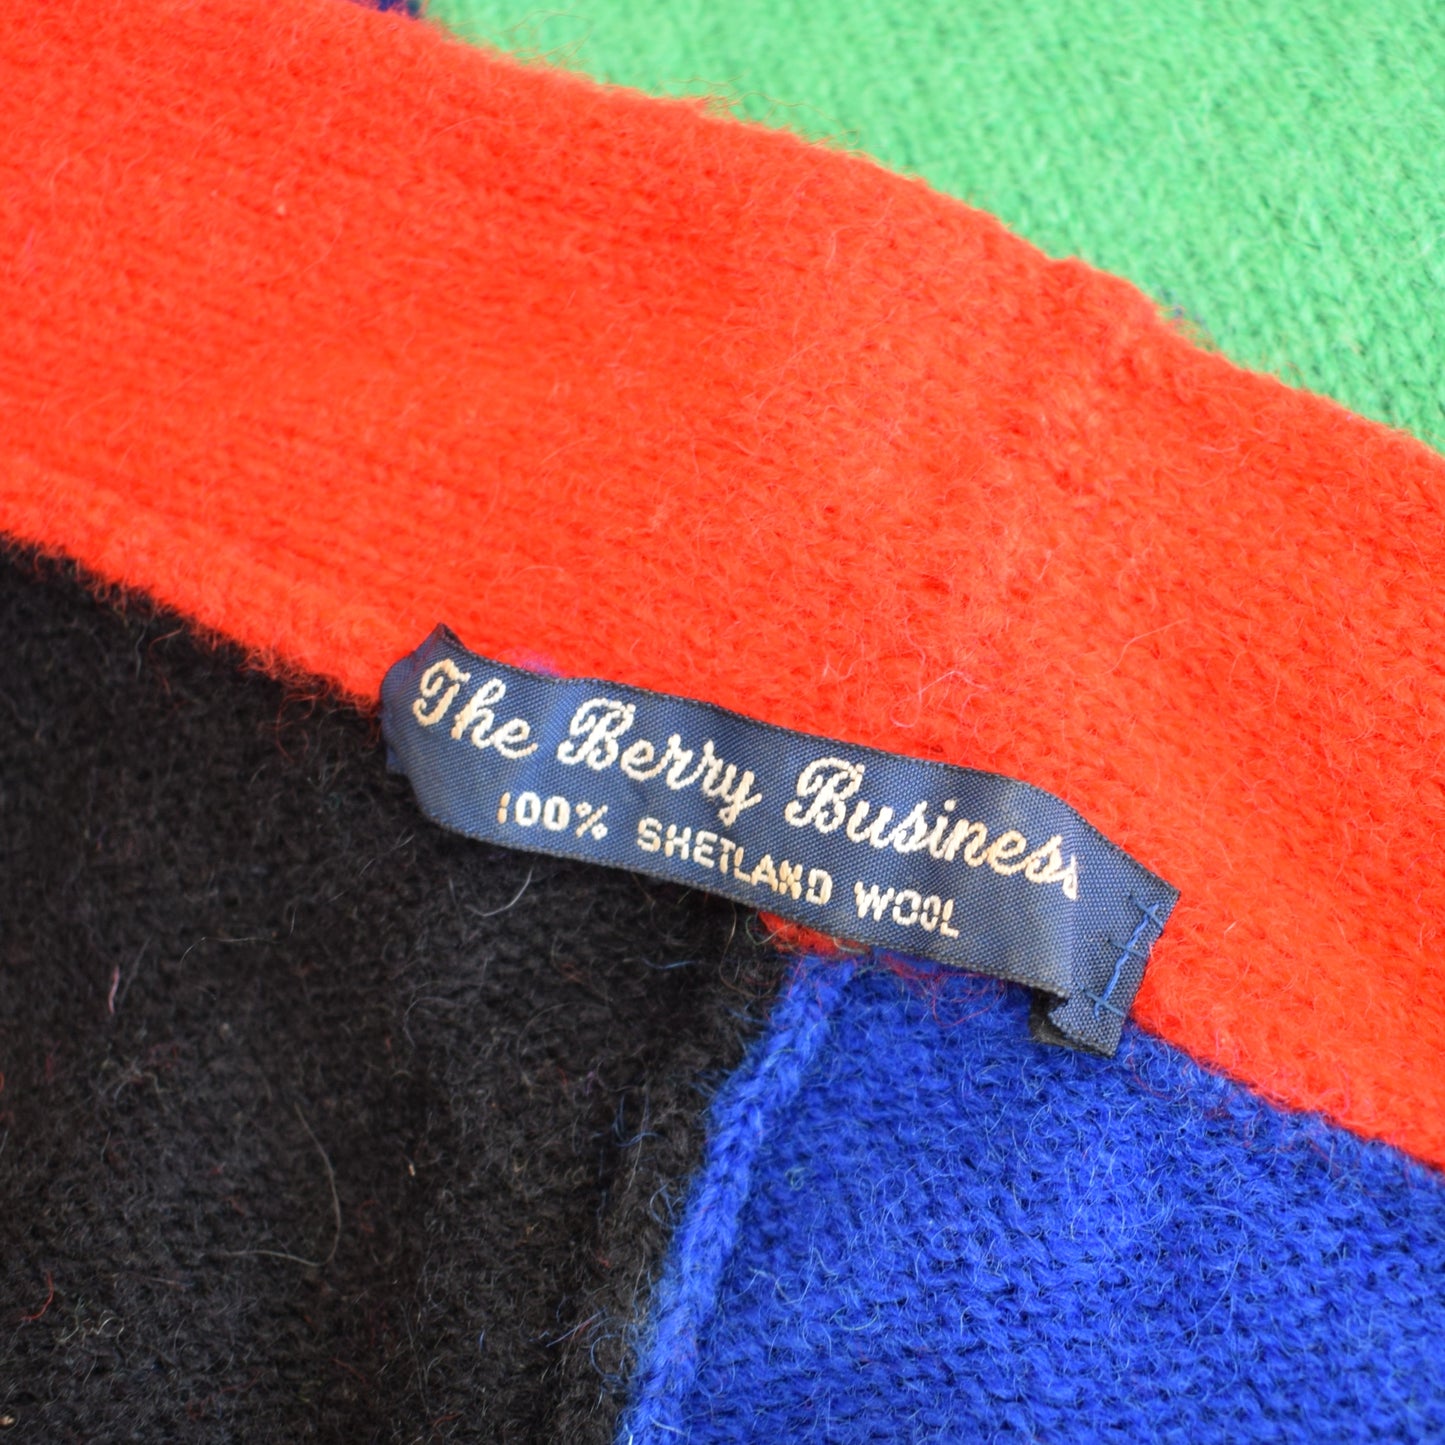 Vintage 1980s Cardigan - 100% Shetland Wool